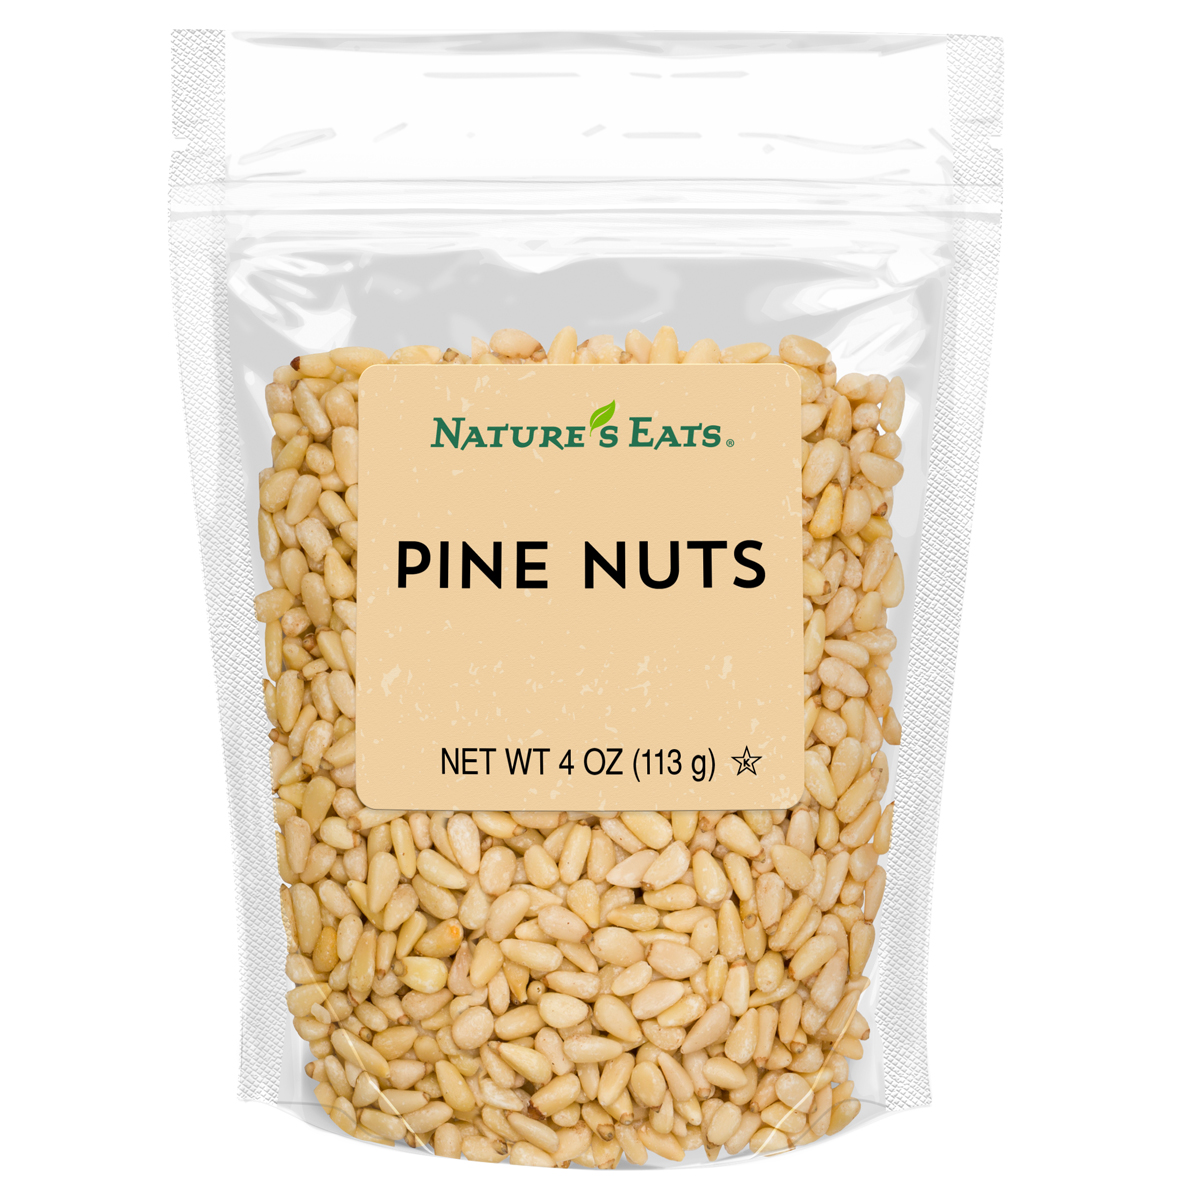 pine-nuts-nep-4oz.jpg